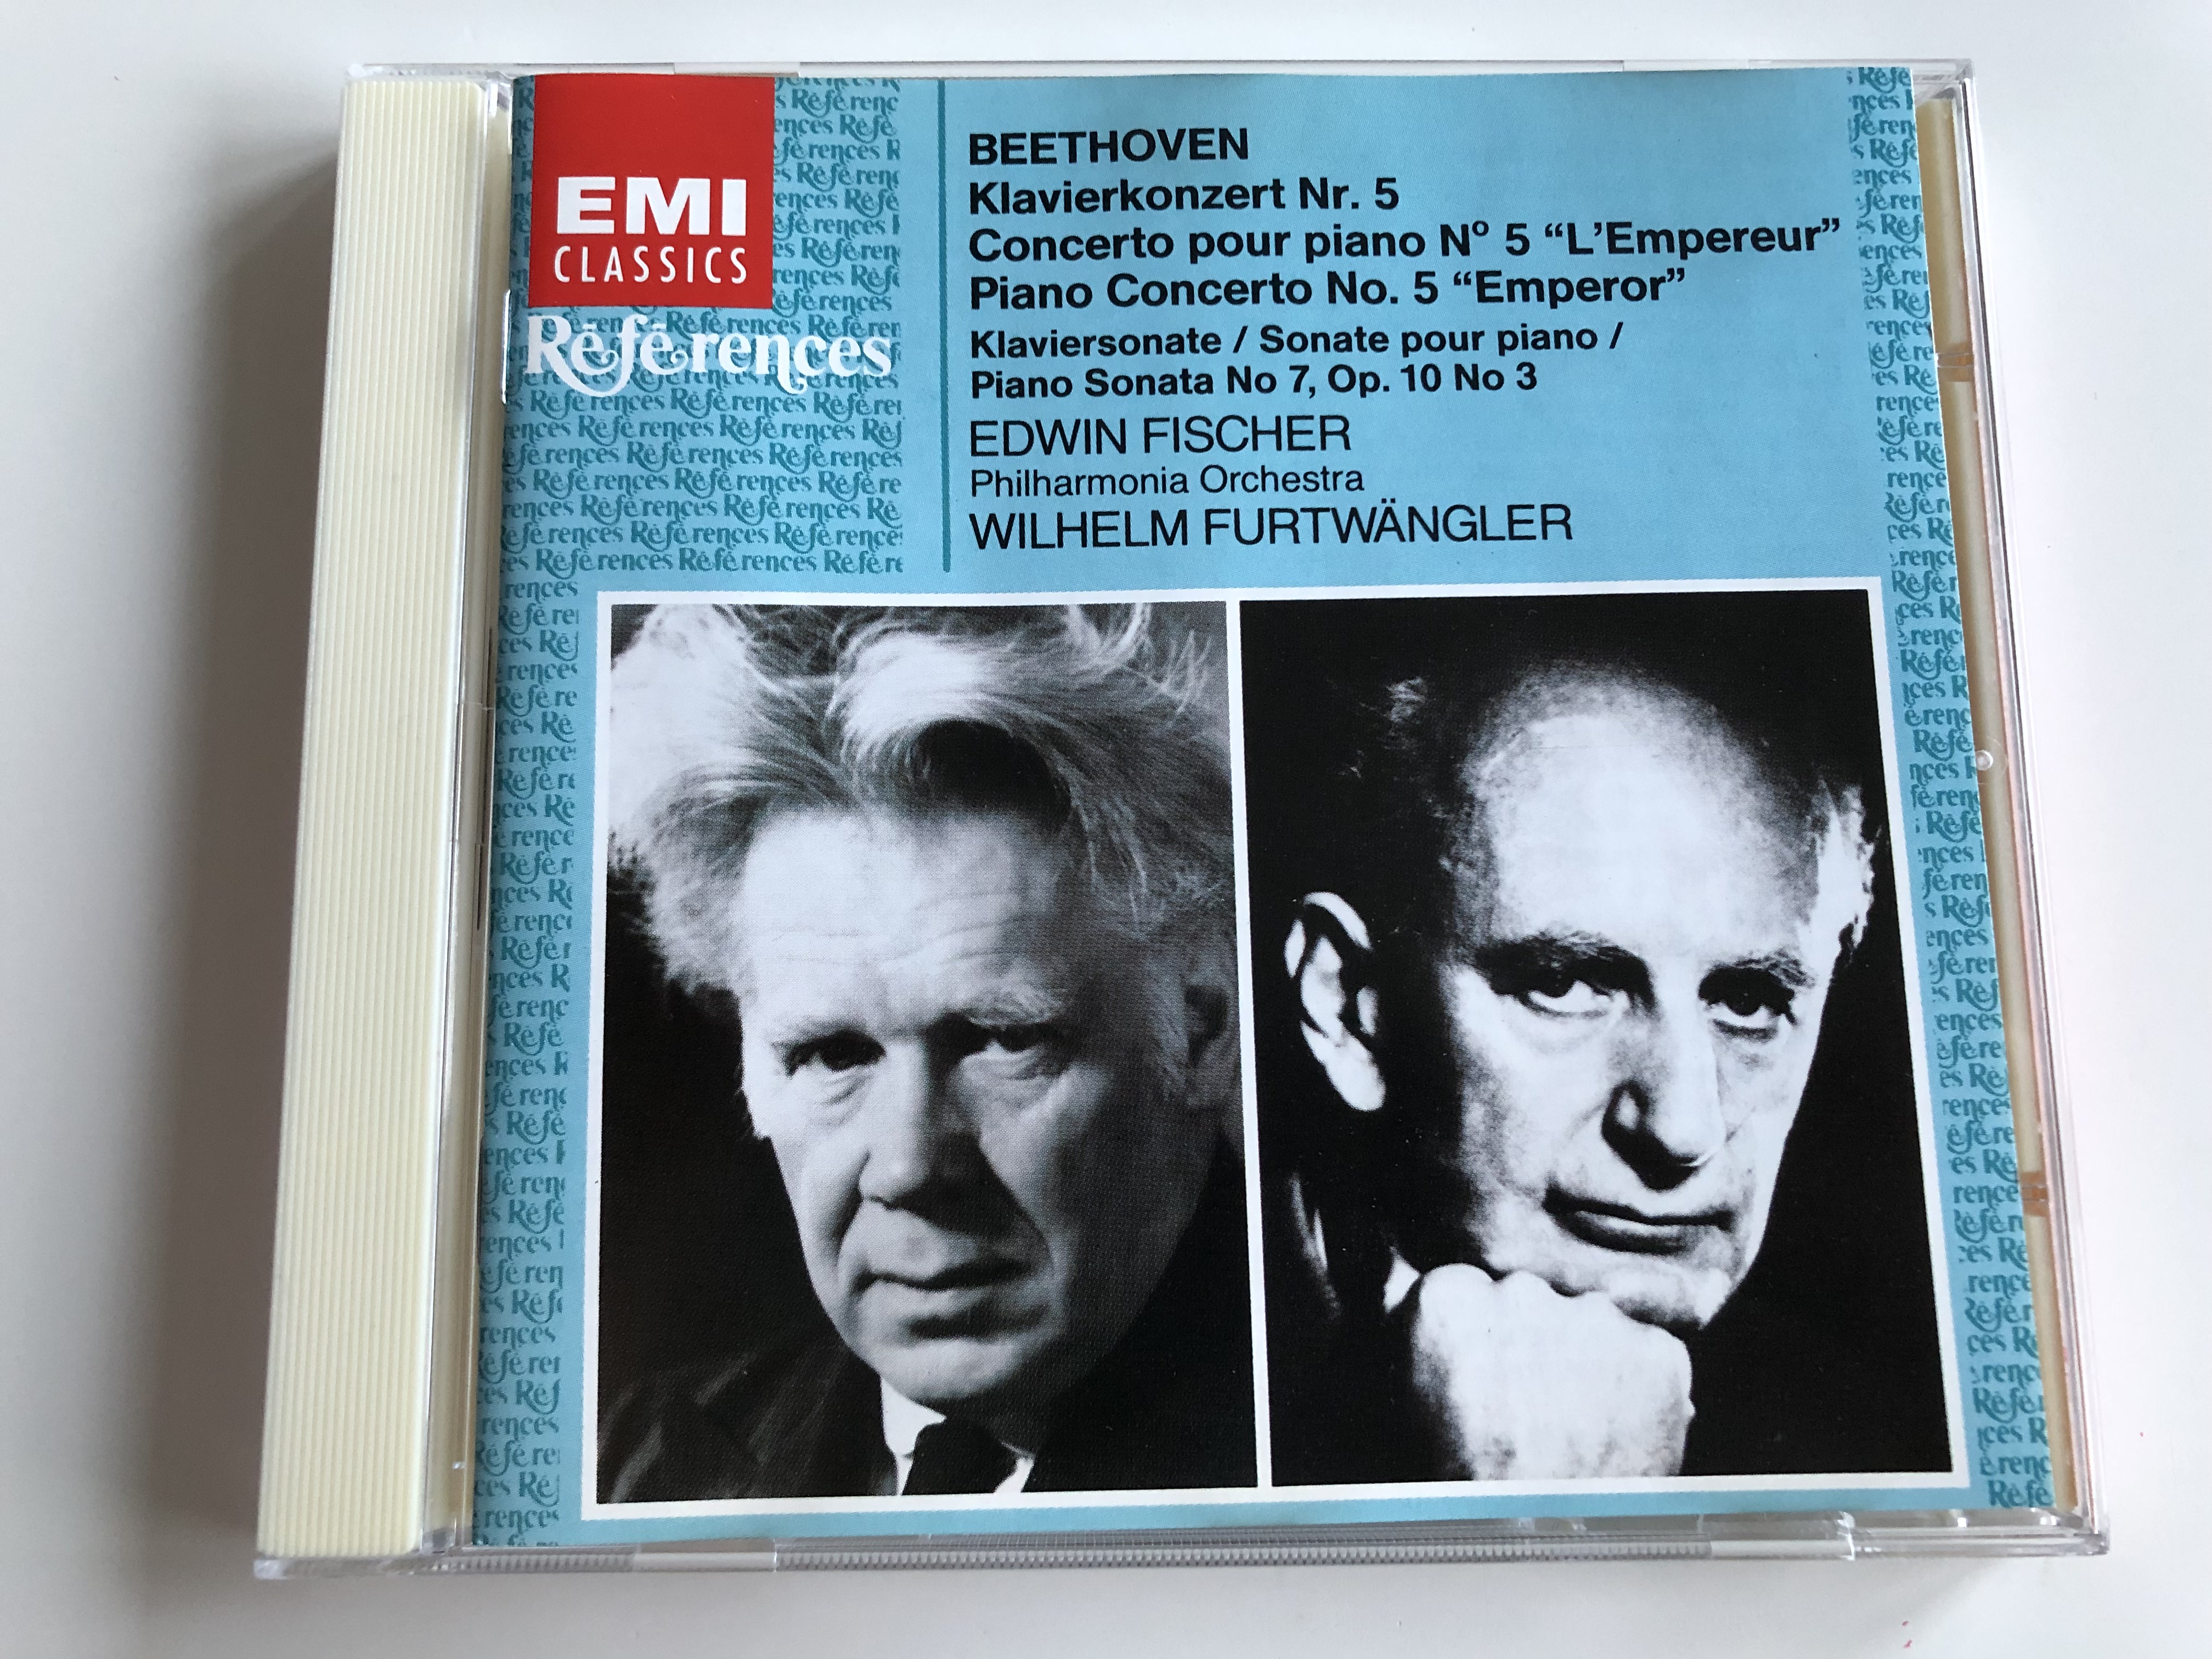 beethoven-piano-concerto-no.-5-emperor-piano-sonata-no.-7-op.-10-no-3-edwin-fischer-philharmonia-orchestra-wilhelm-furtw-ngler-emi-classics-audio-cd-2004-mono-724356279827-1-.jpg